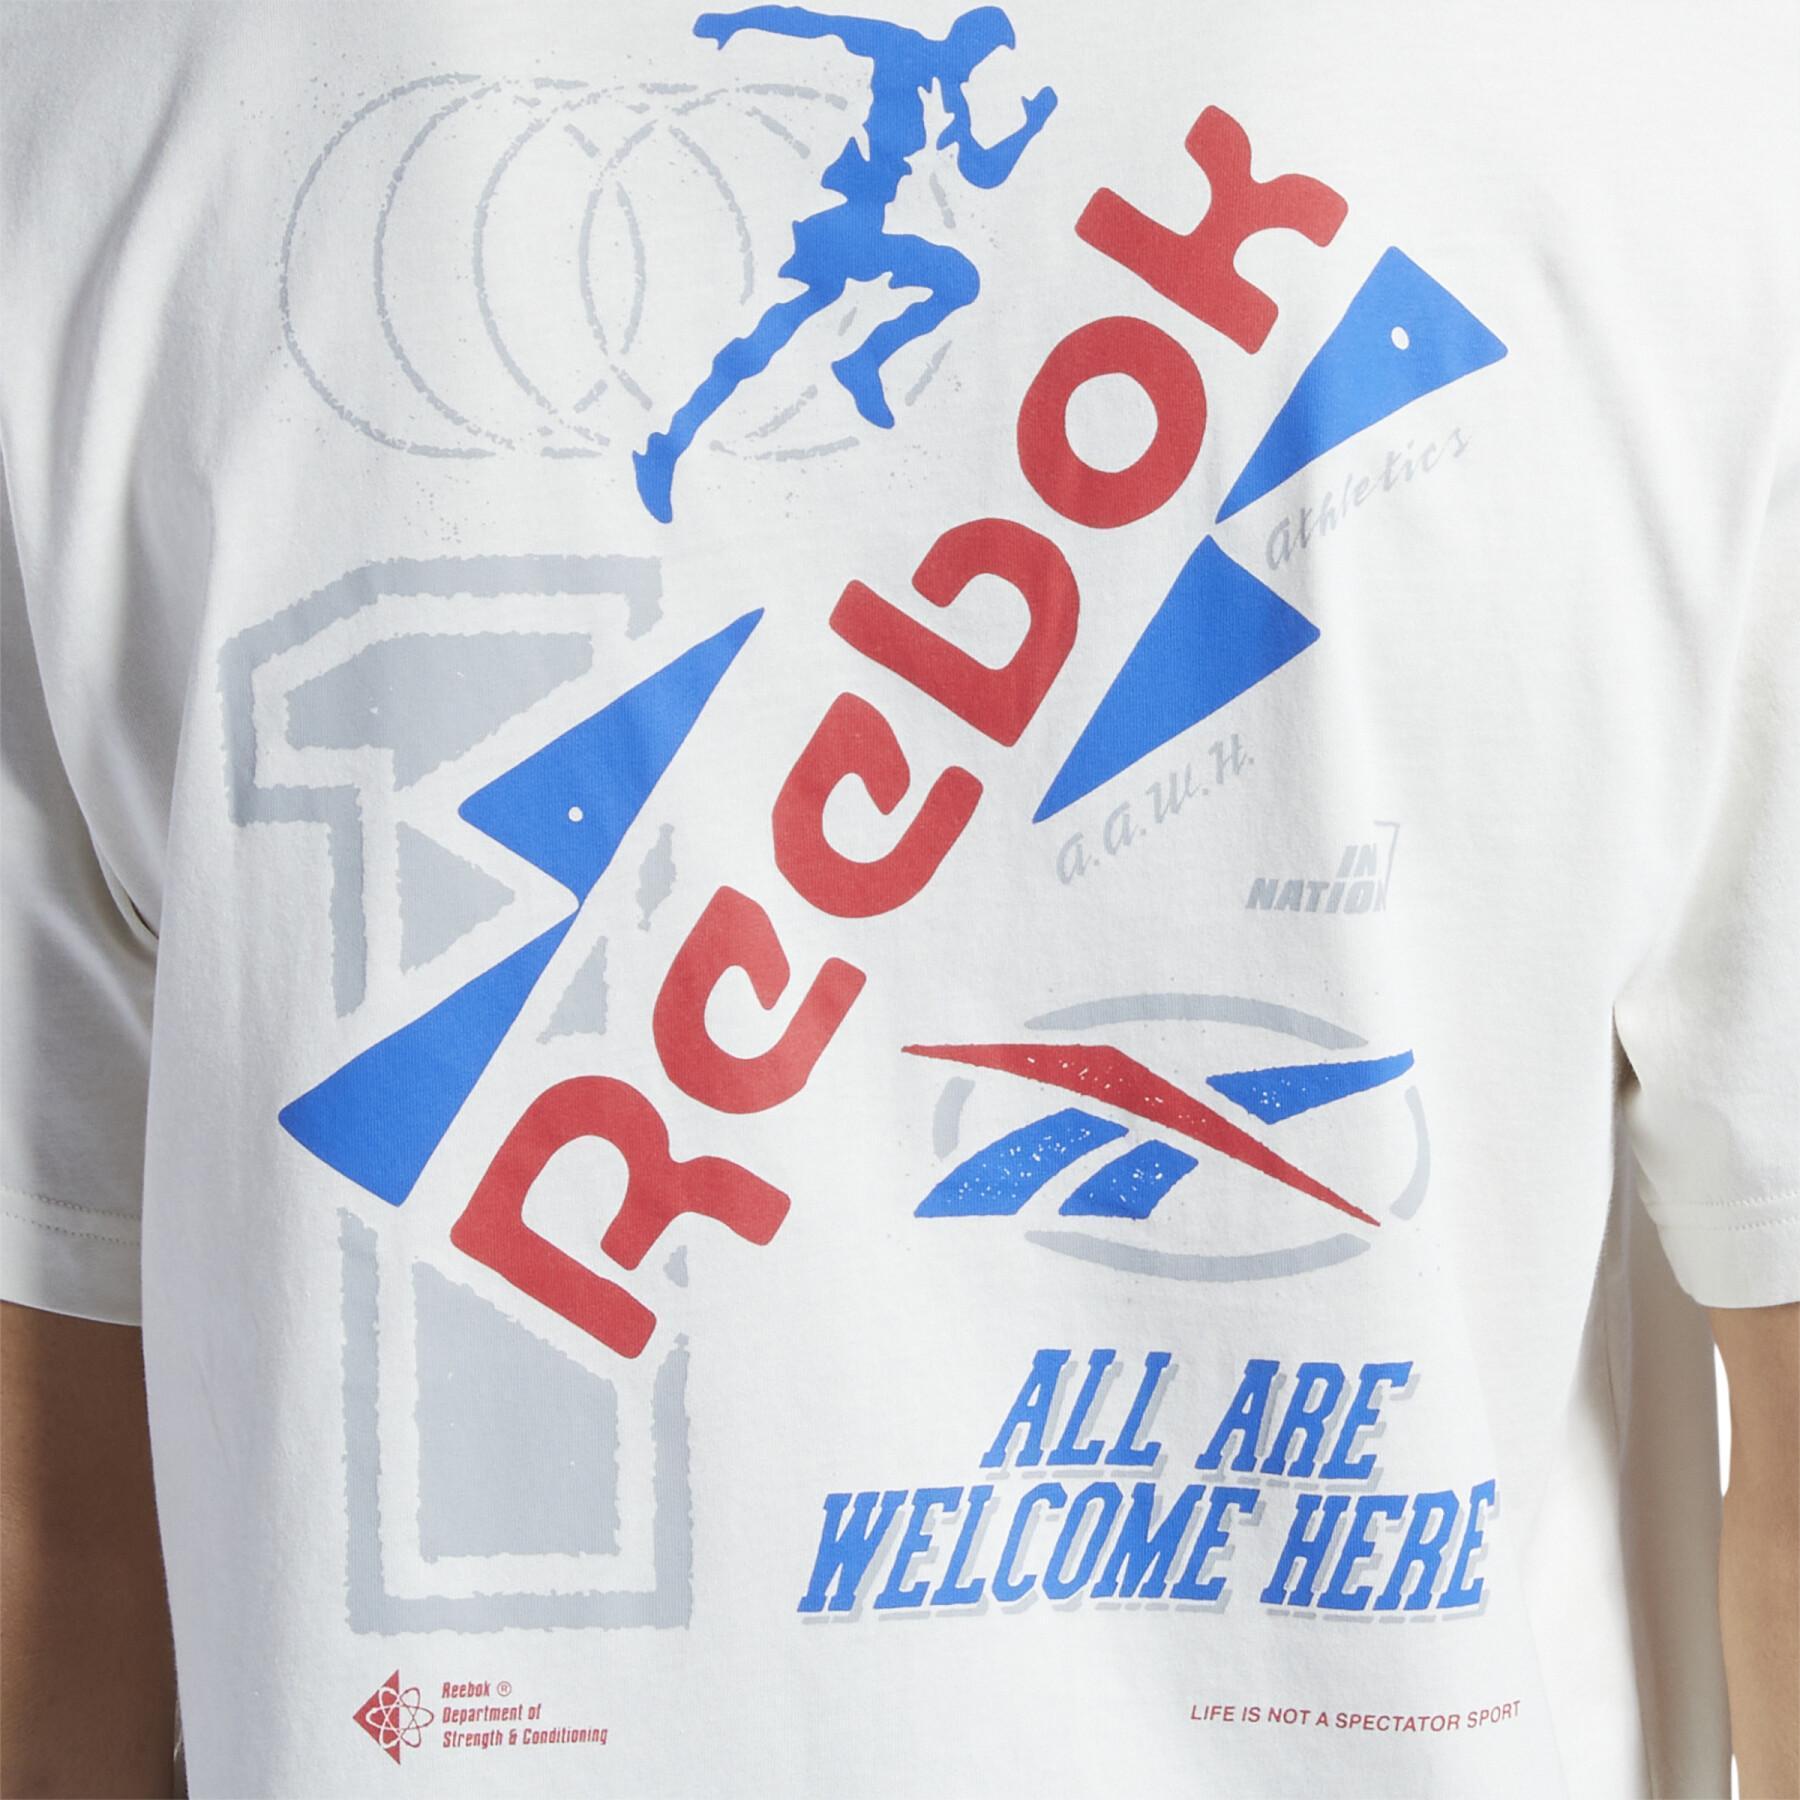 Graphic T-shirt Reebok Series Certified